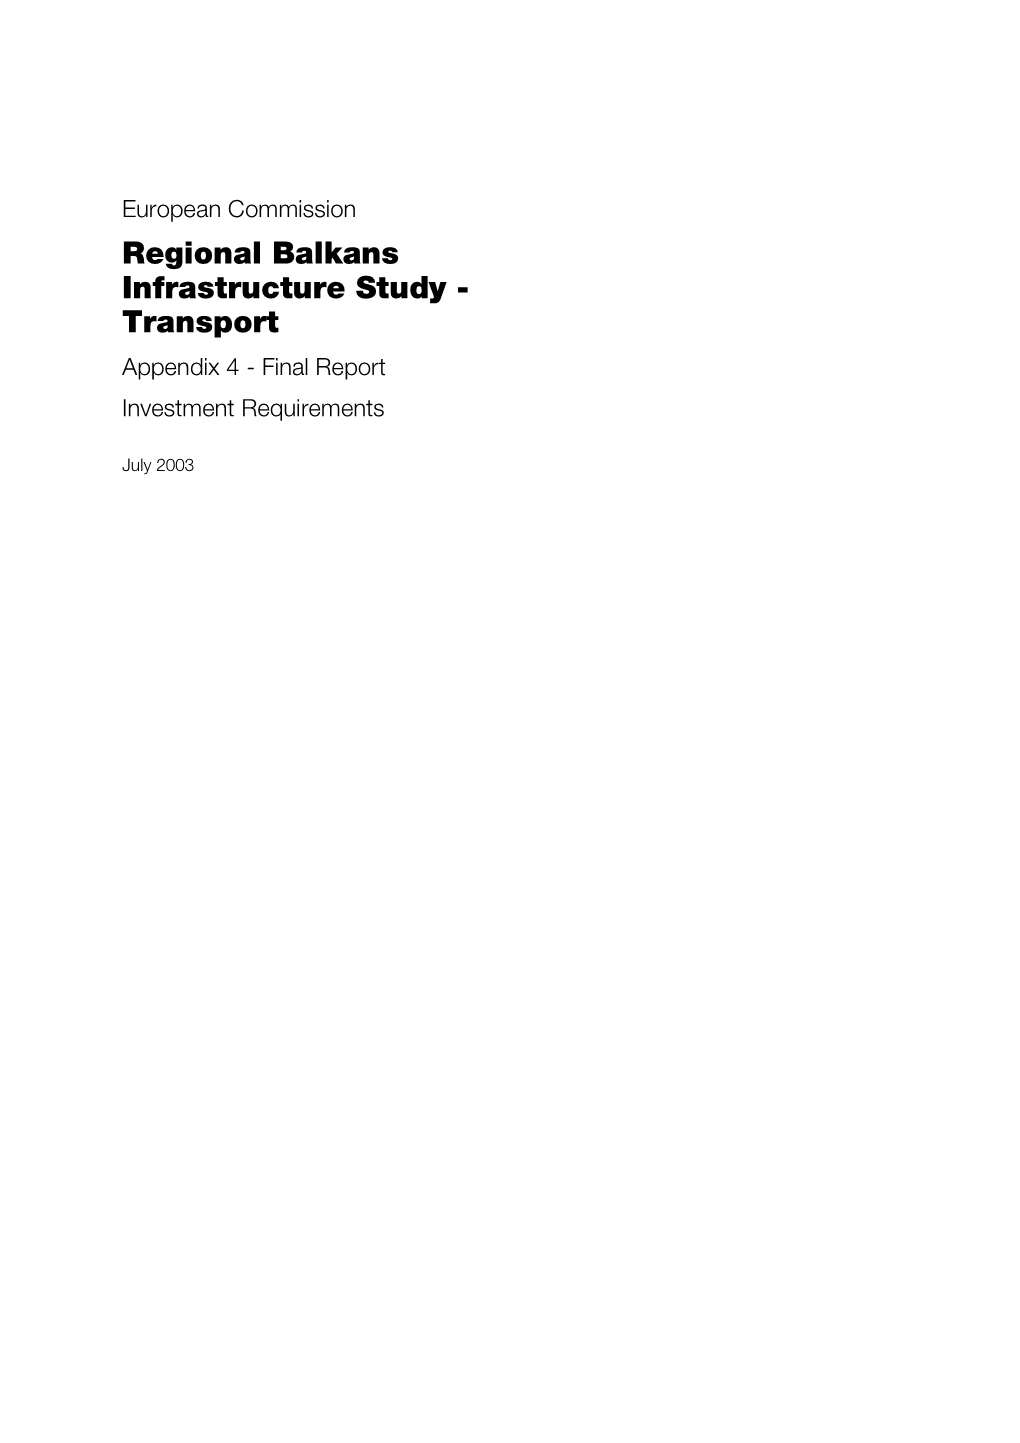 Regional Balkans Infrastructure Study - Transport Appendix 4 - Final Report Investment Requirements